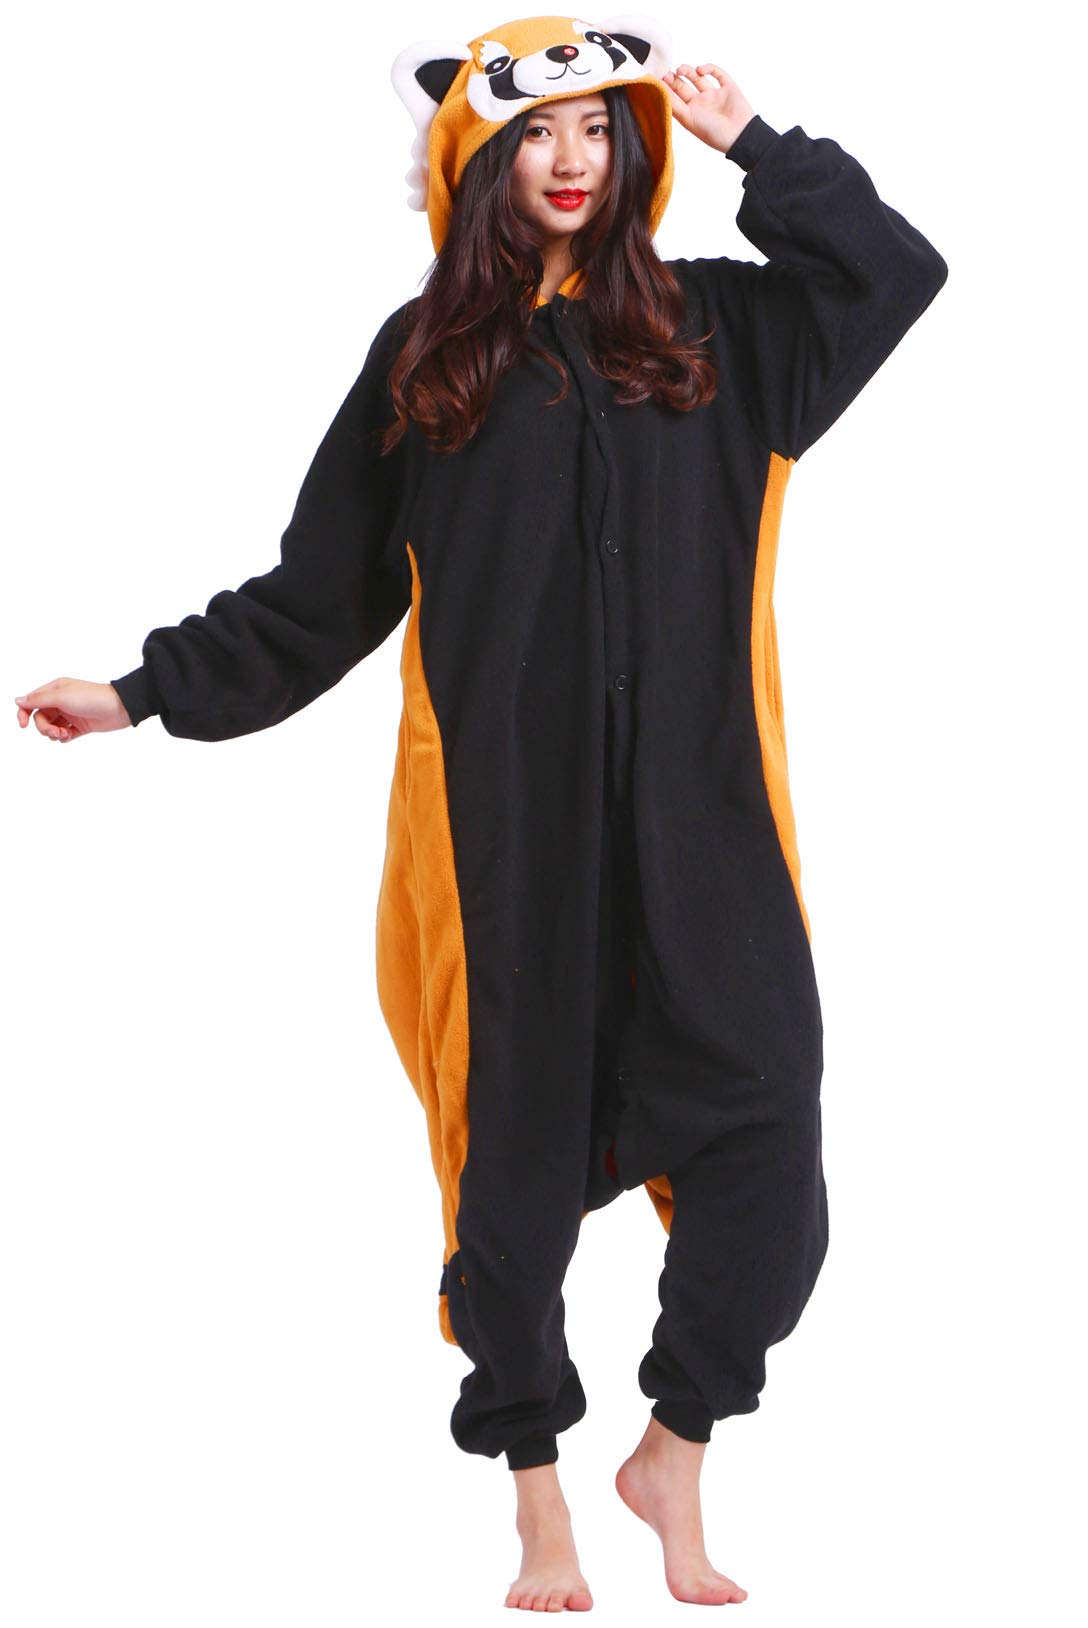 ULEEMARK Jumpsuit Onesie Tier Karton Kigurumi Fasching Halloween Kostüm Lounge Sleepsuit Cosplay Overall Pyjama Schlafanzug Erwachsene Unisex Rote Panda for Höhe 140-187CM